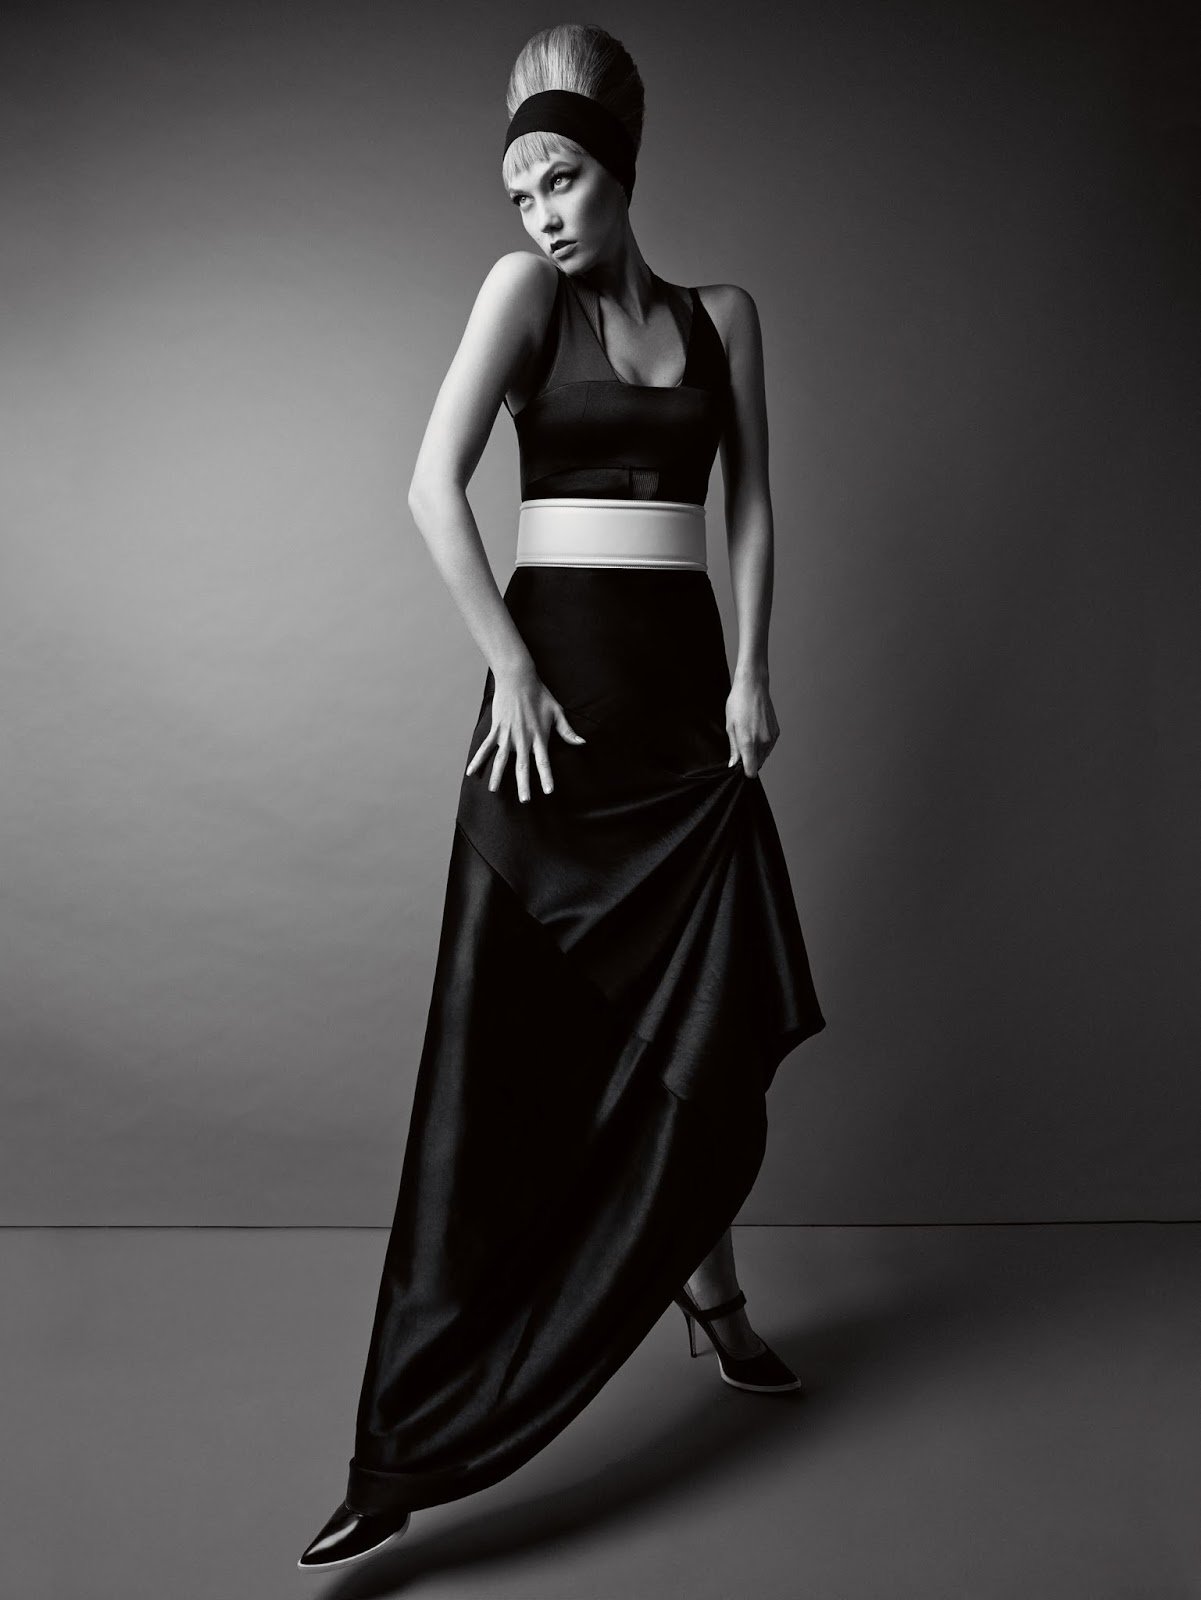 Karlie-Kloss-by-Patrick-Demarchelier-for-Vogue-UK-November-2015-6.jpg